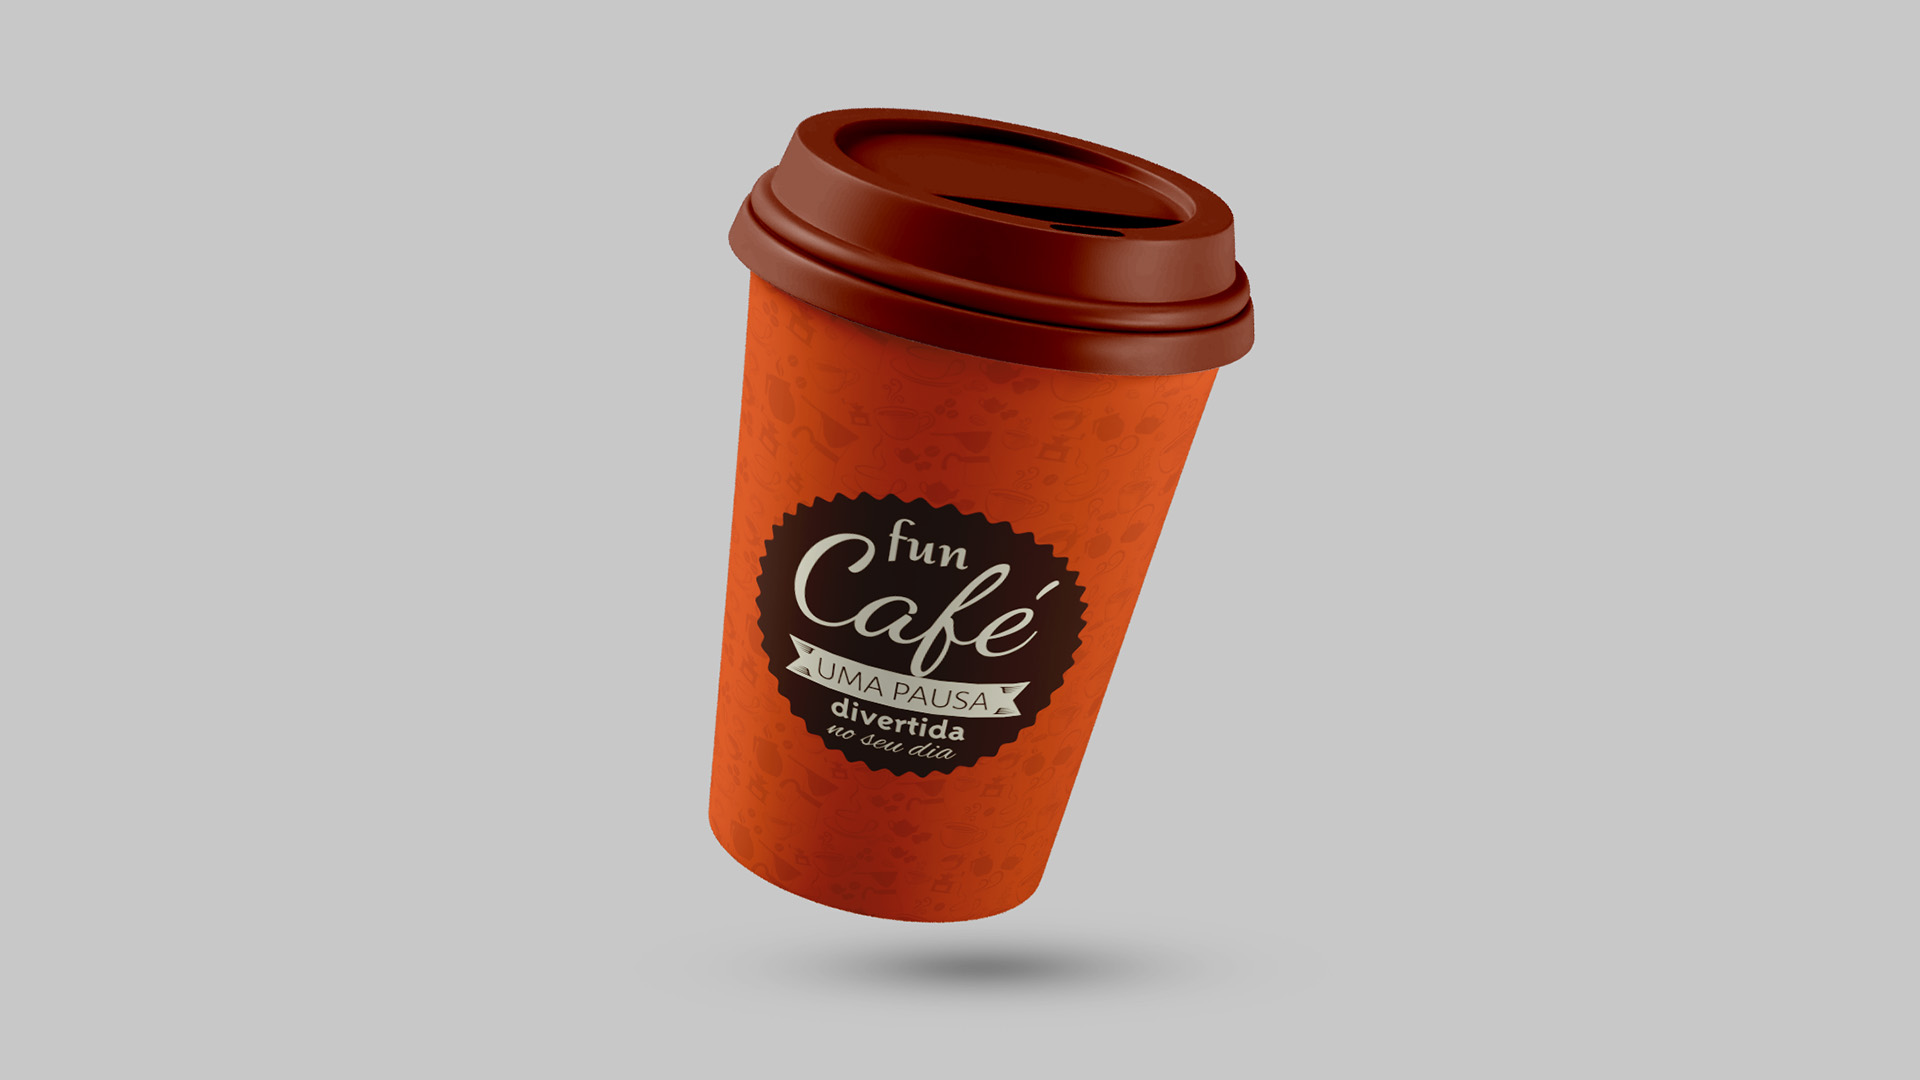 Imagem de copo de café com o logotipo Fun Café Wheaton.